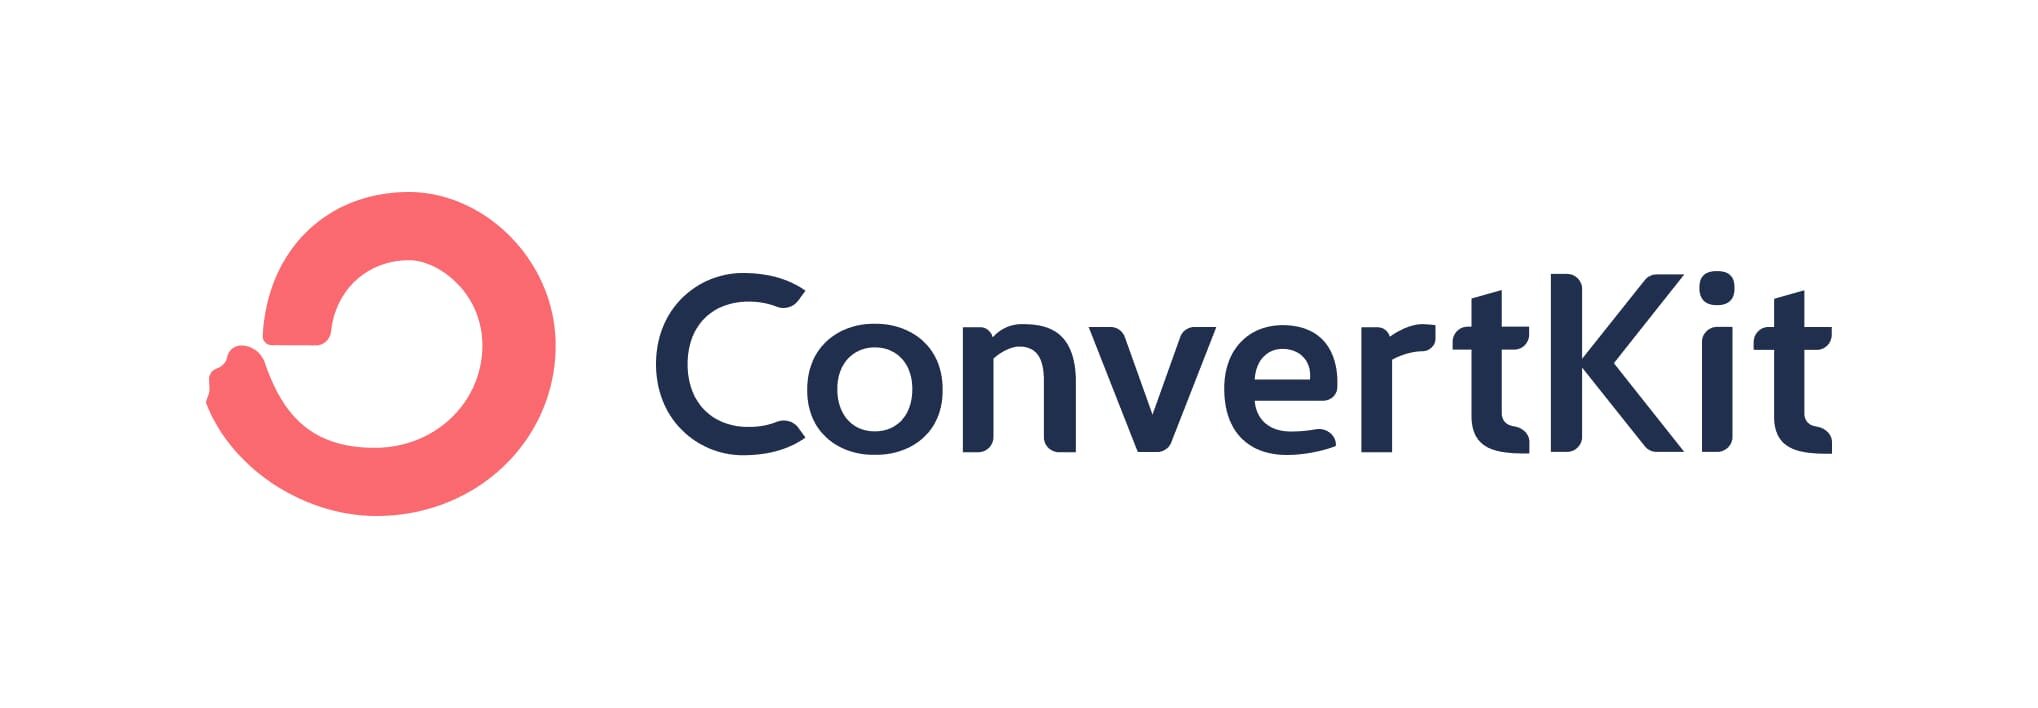 ConvertKit: Email Service Provider